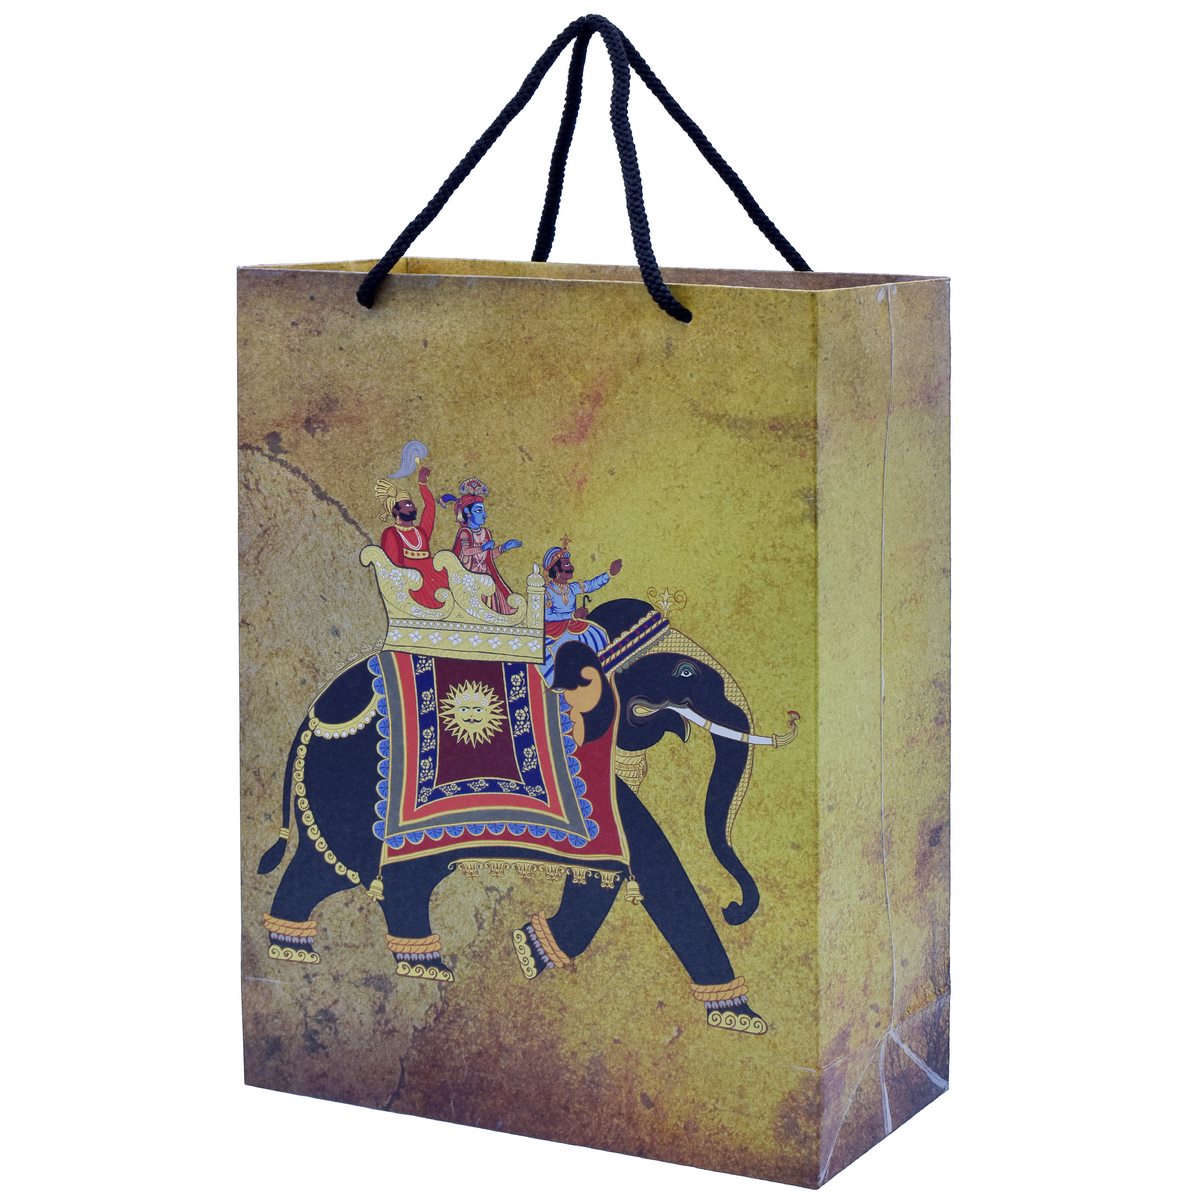 jags-mumbai Bag Jags Paper Bag Medium Decorated Elephant A4 JPBM00 (Contain 1 Unit2)